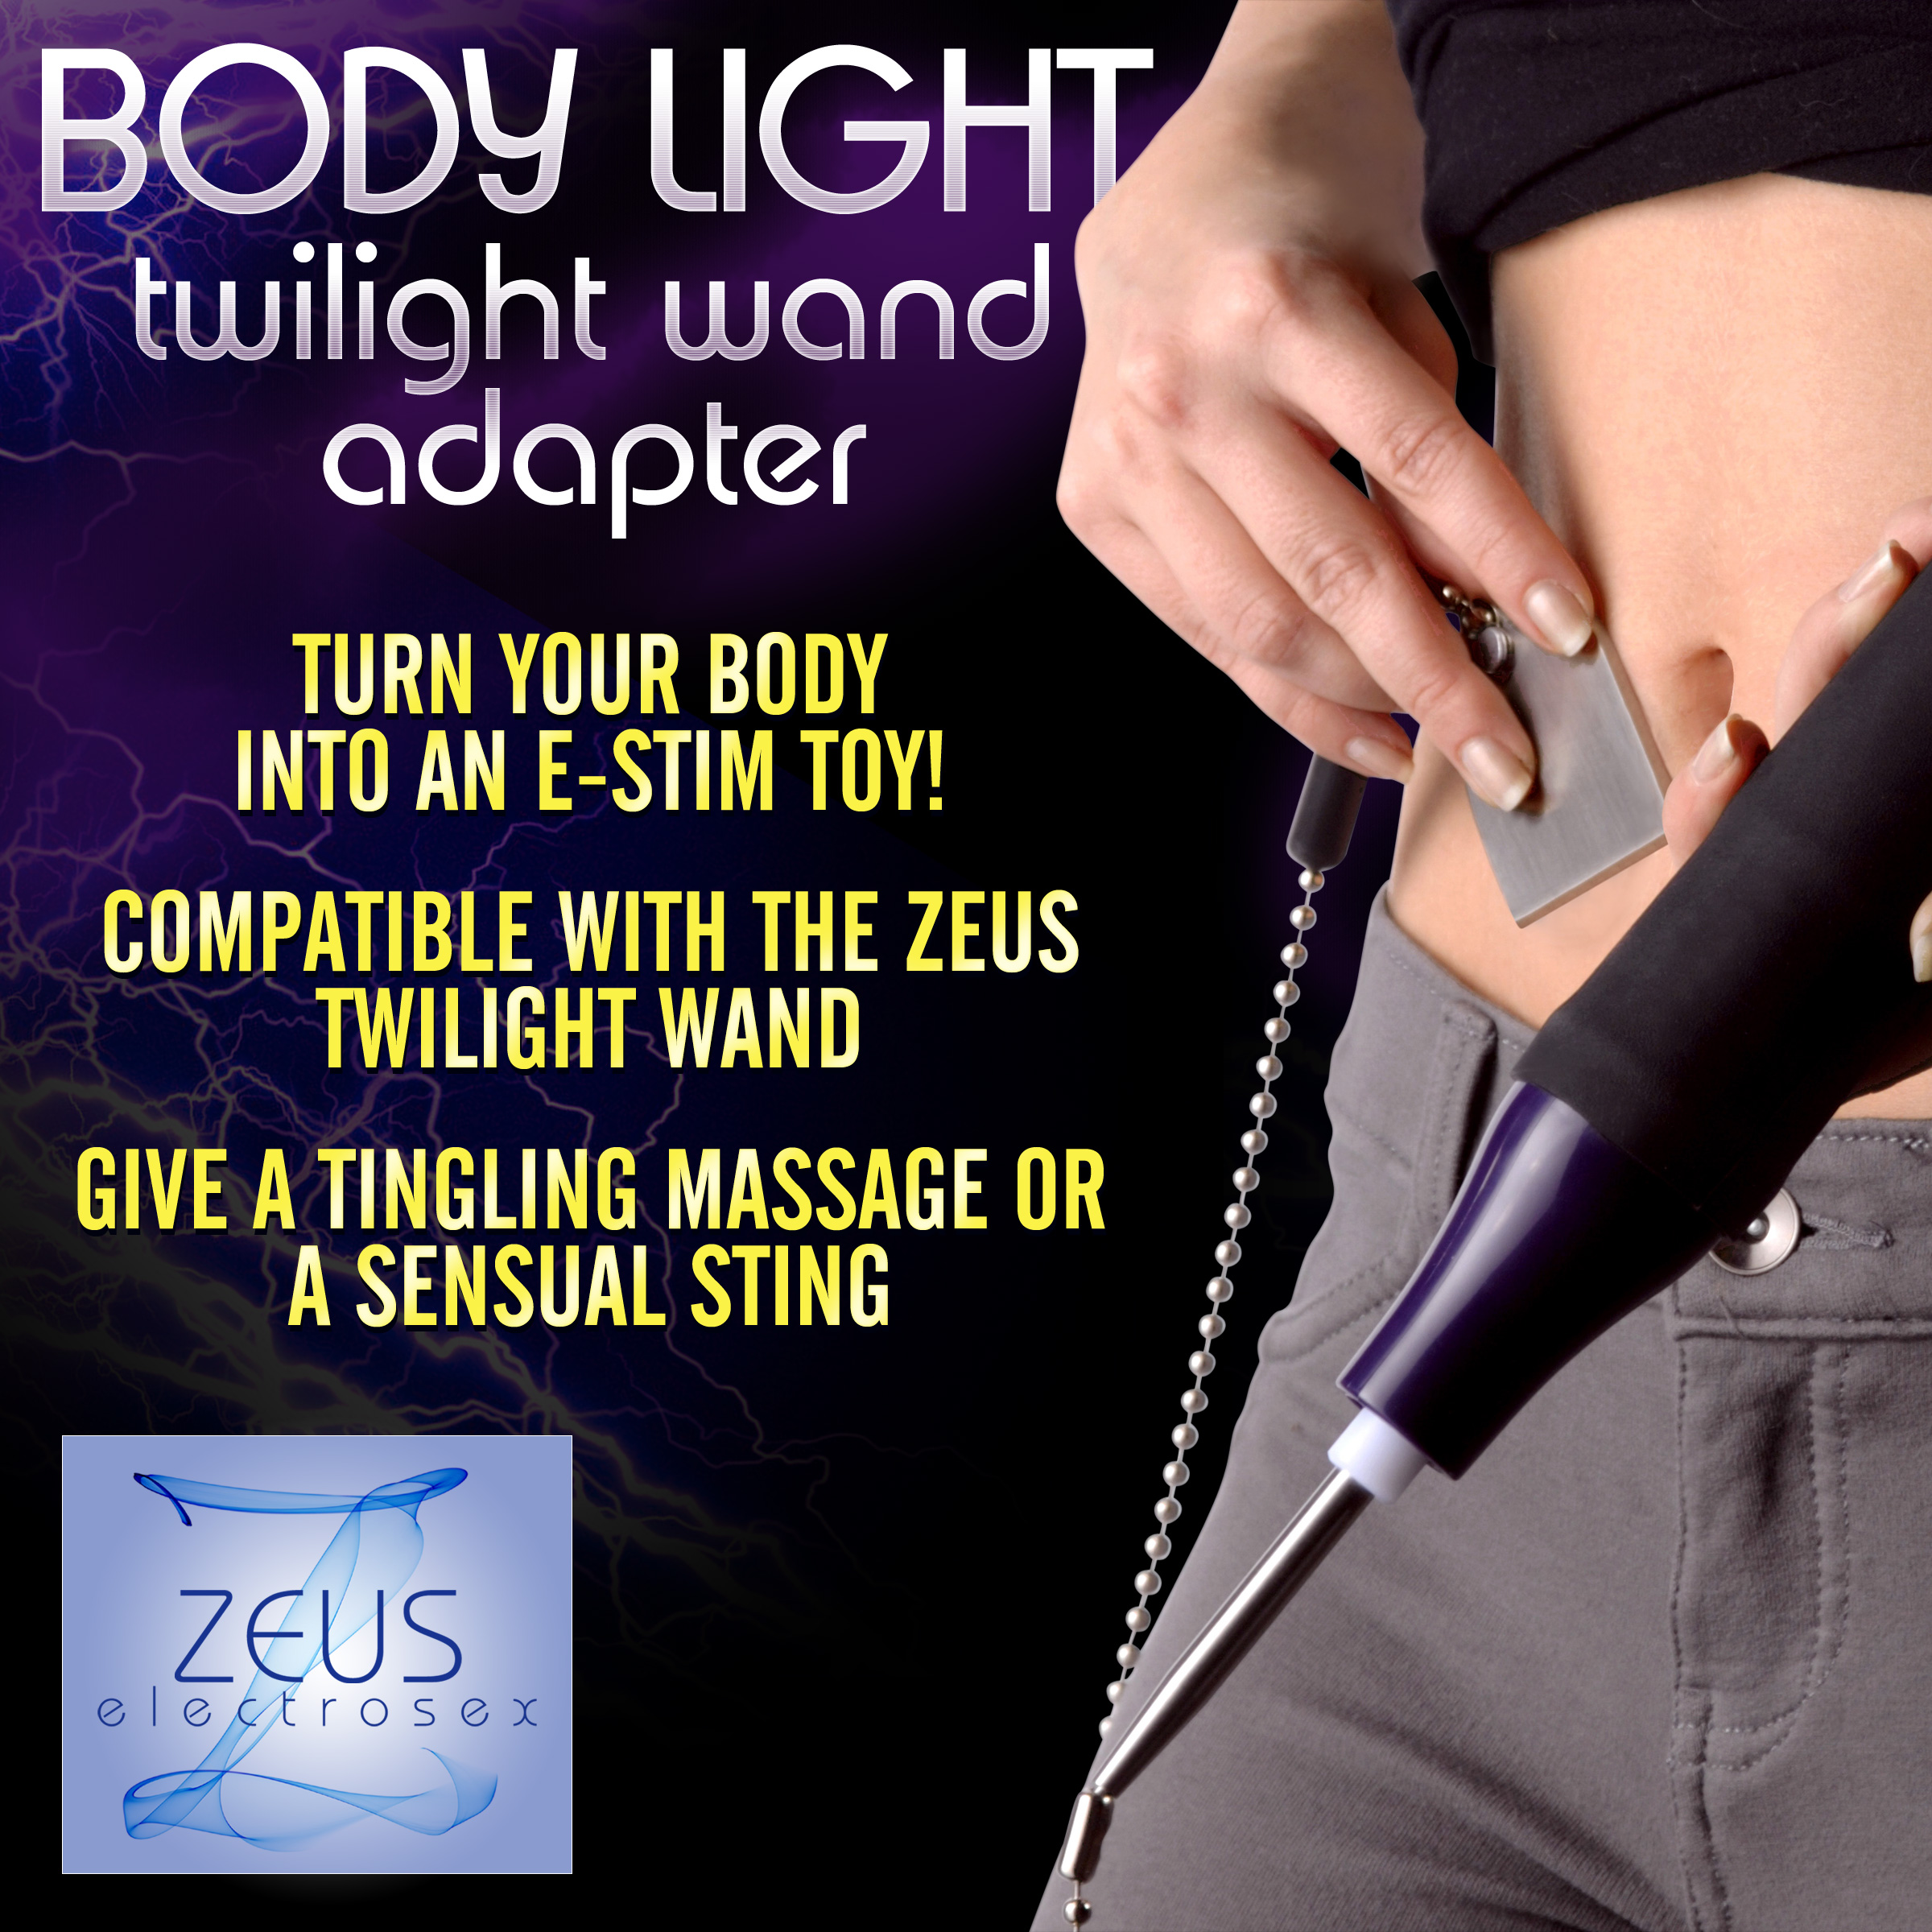 Zeus Bodylight Twilight Wand Adapter